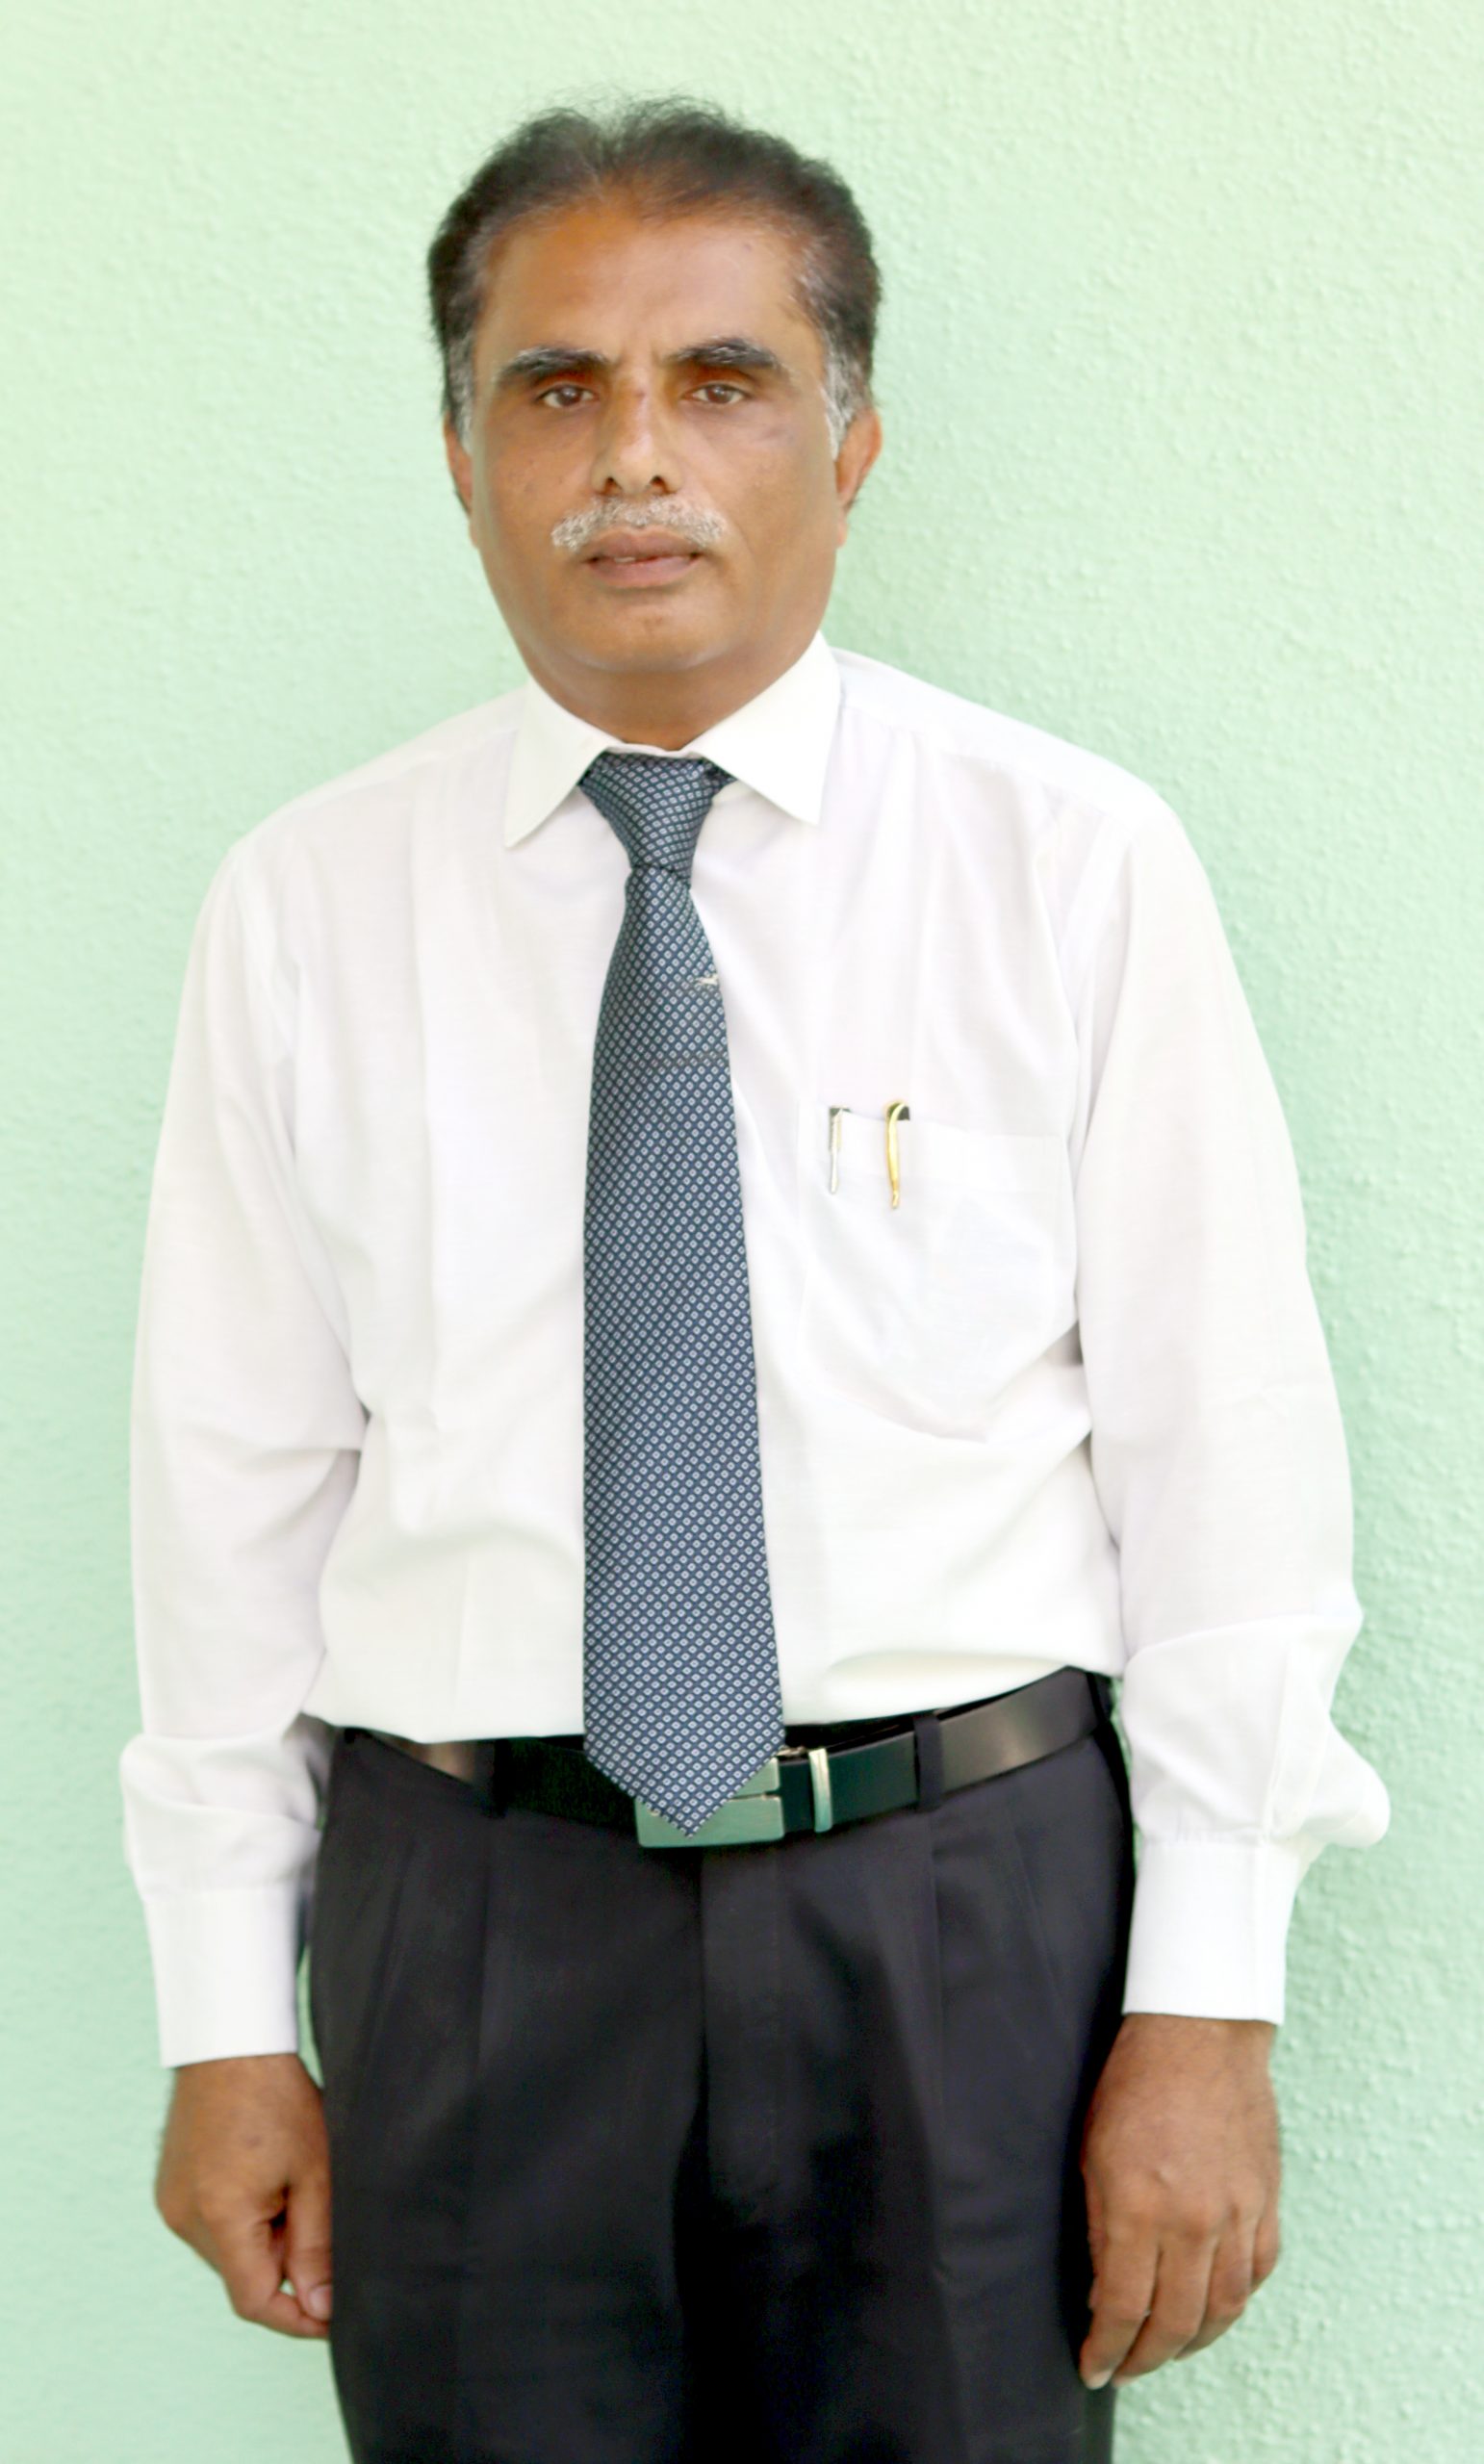 Prof. Asifkhan Yusufzai